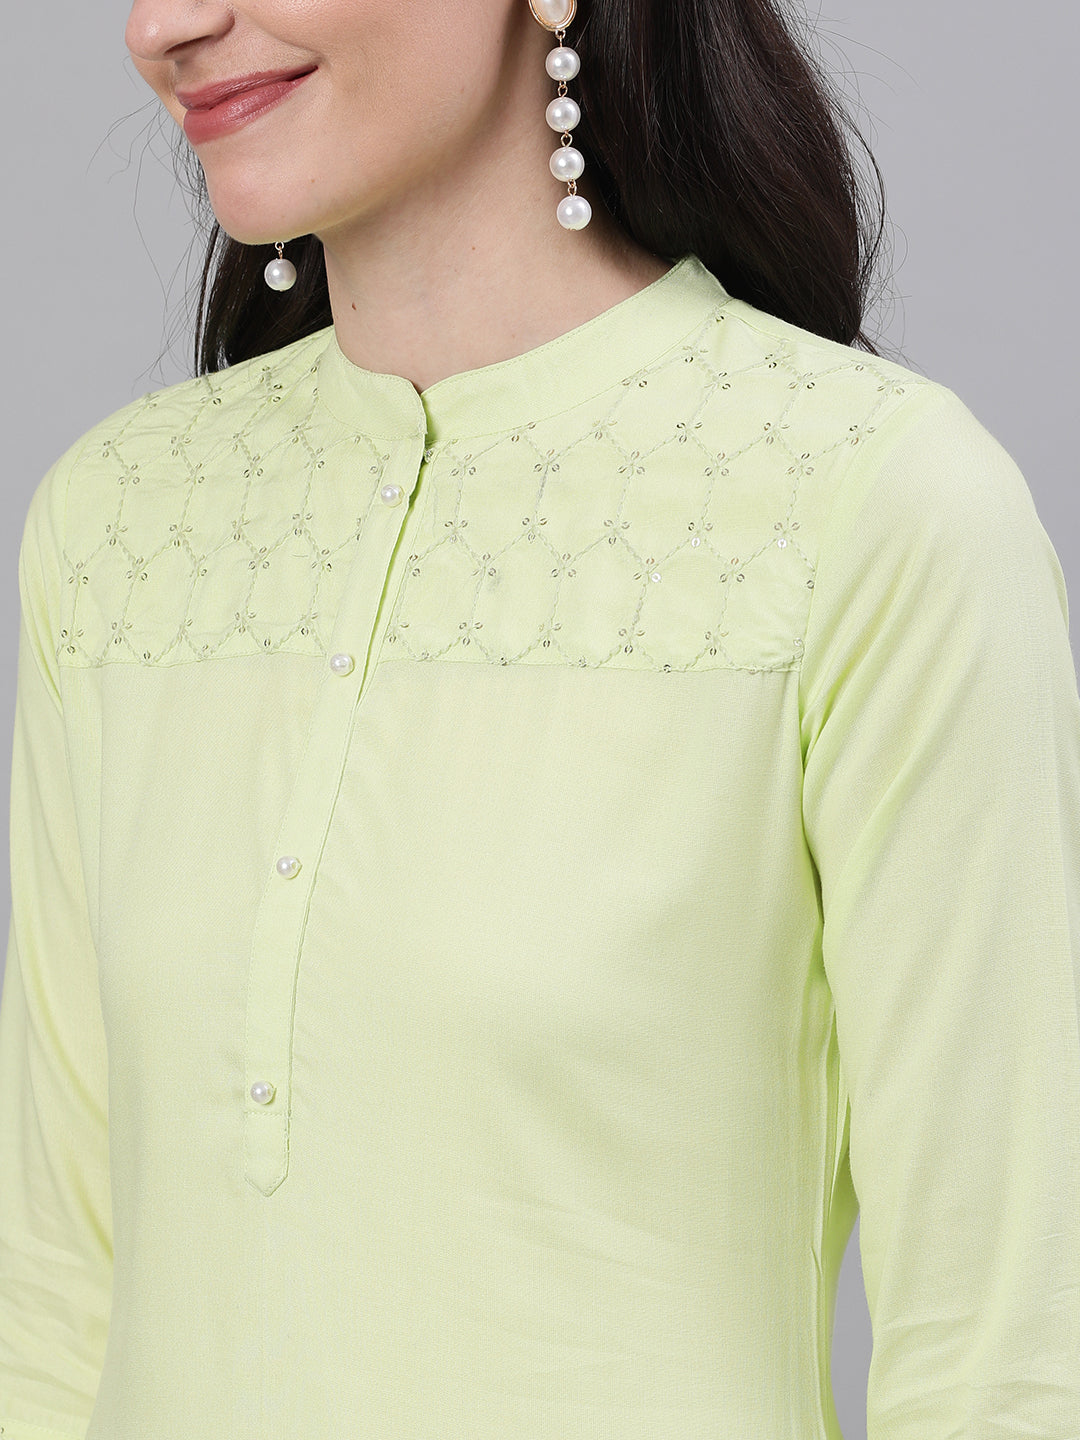 Women's Lime Green Calf Length Three-Quarter Sleeves Straight Solid Solid Viscose Rayon Kurta - Nayo Clothing